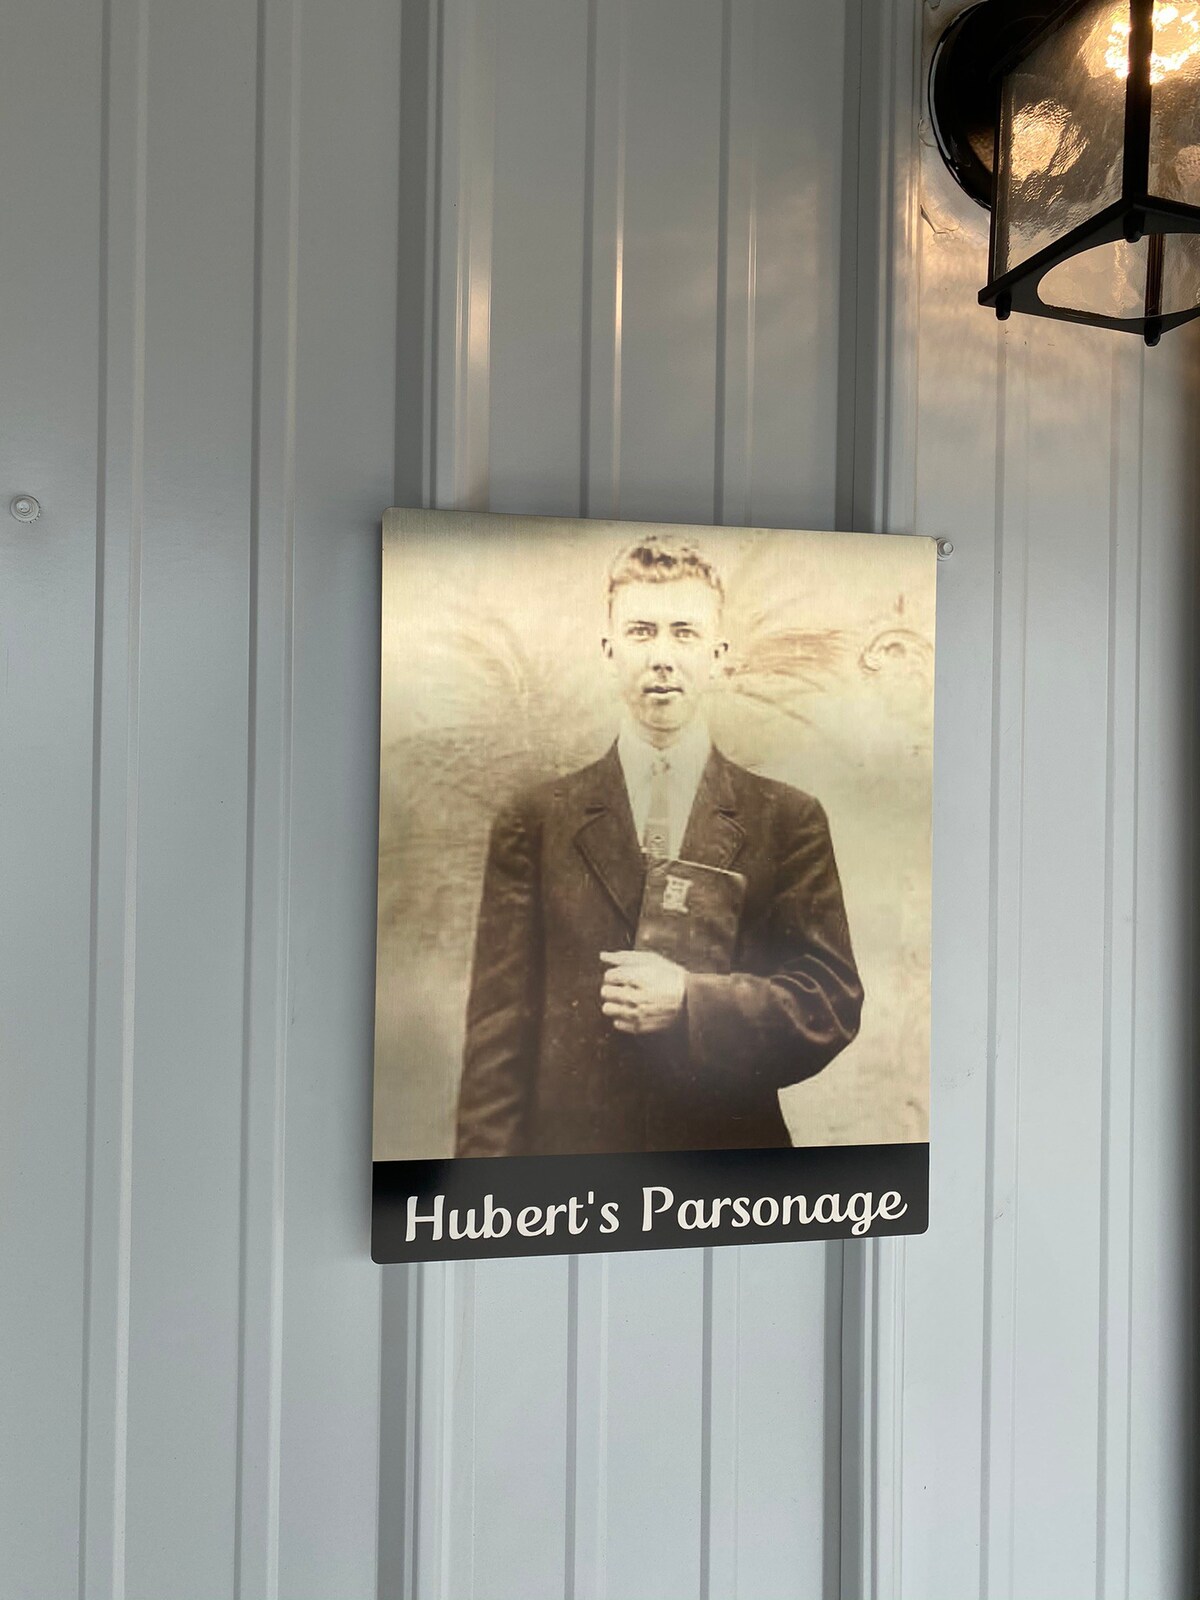 Hubert 's Parsonage: 66号公路上的宽敞客房